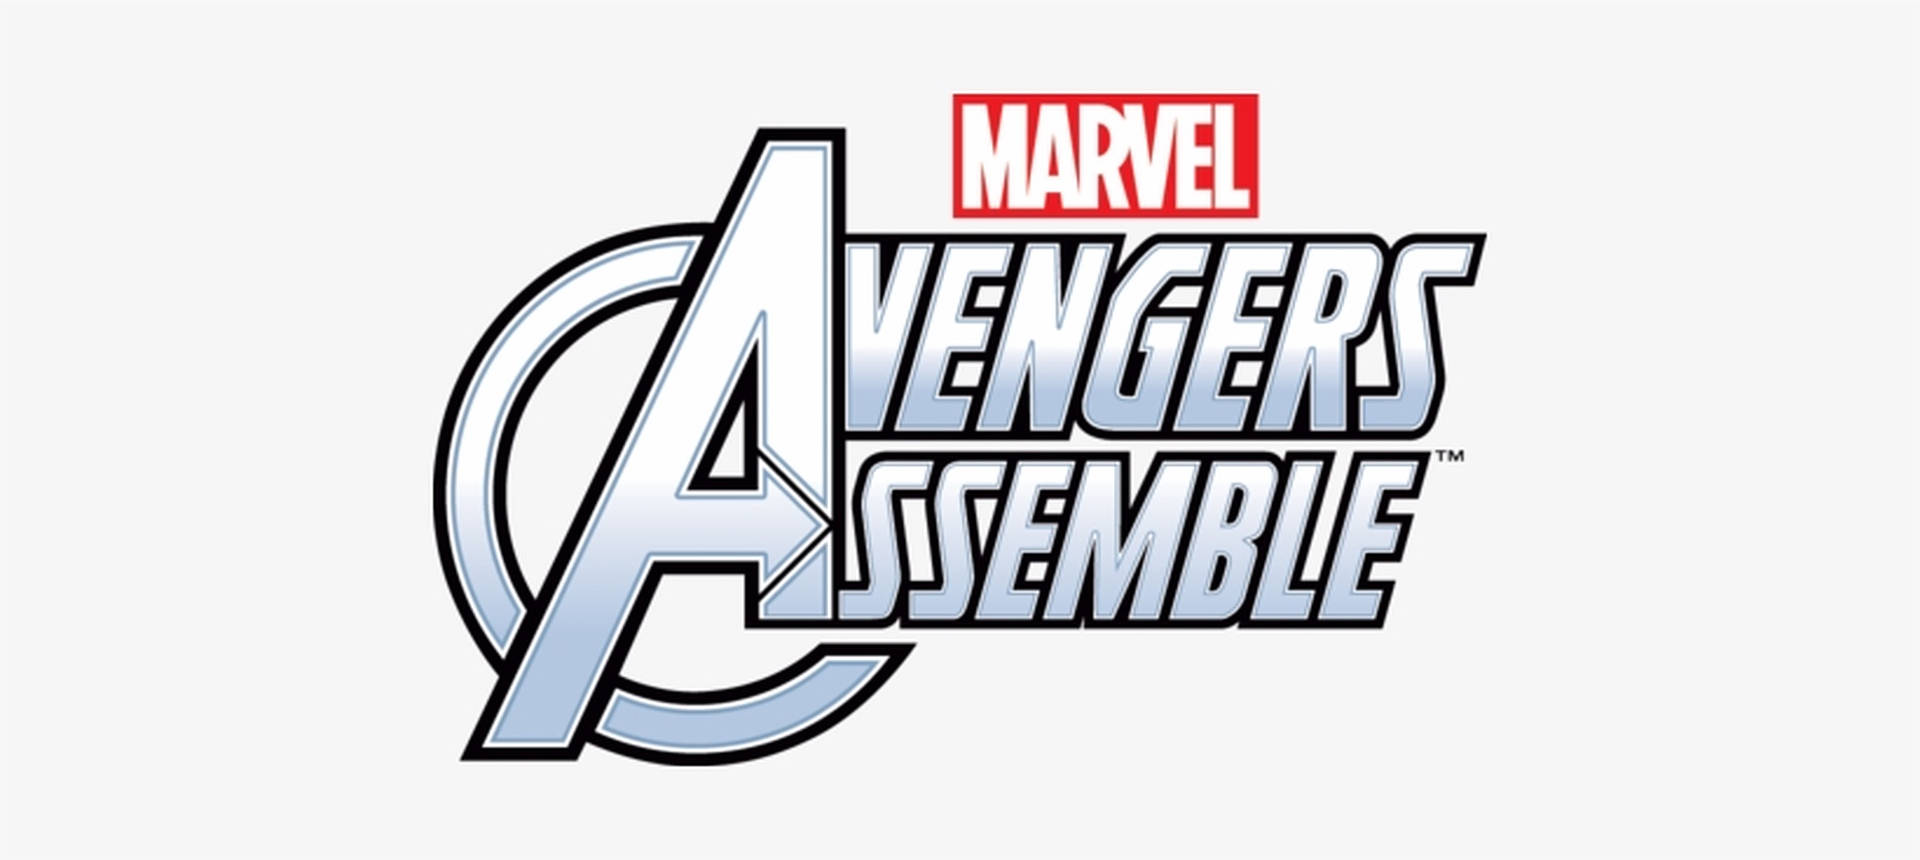 Avengers assemble HD wallpapers free download  Wallpaperbetter